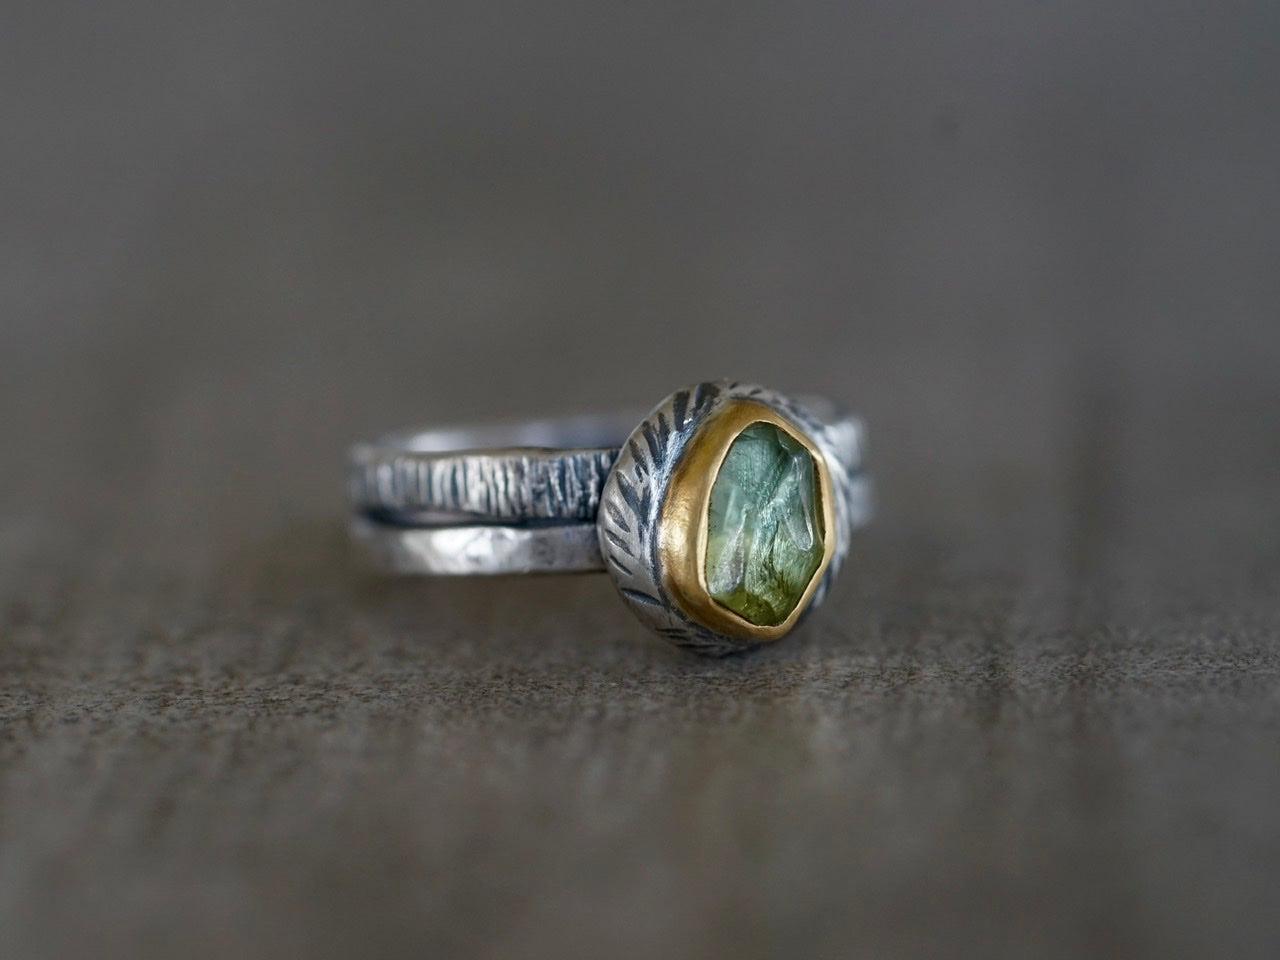 Green tourmaline and 22 k gold swirl ring, size 7.25